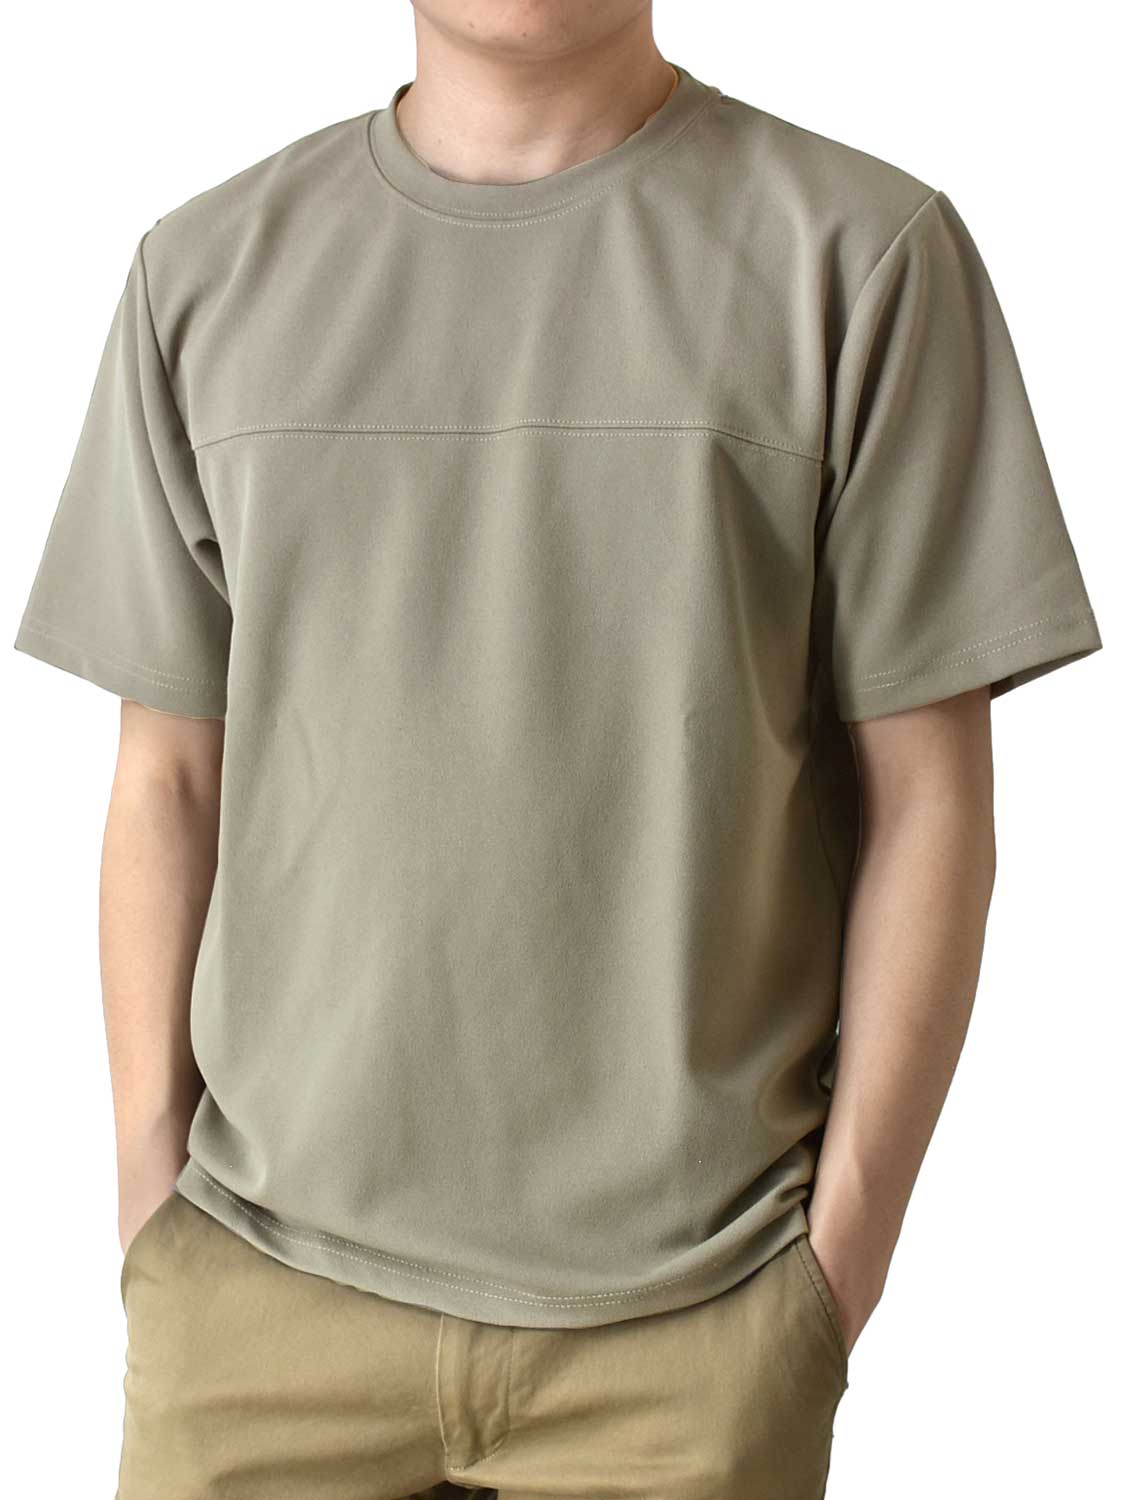 Tシャツ 接触冷感 メンズ 半袖 DRYストレッチ 速乾 UVカット くすみカラー 送料無料 通販Y